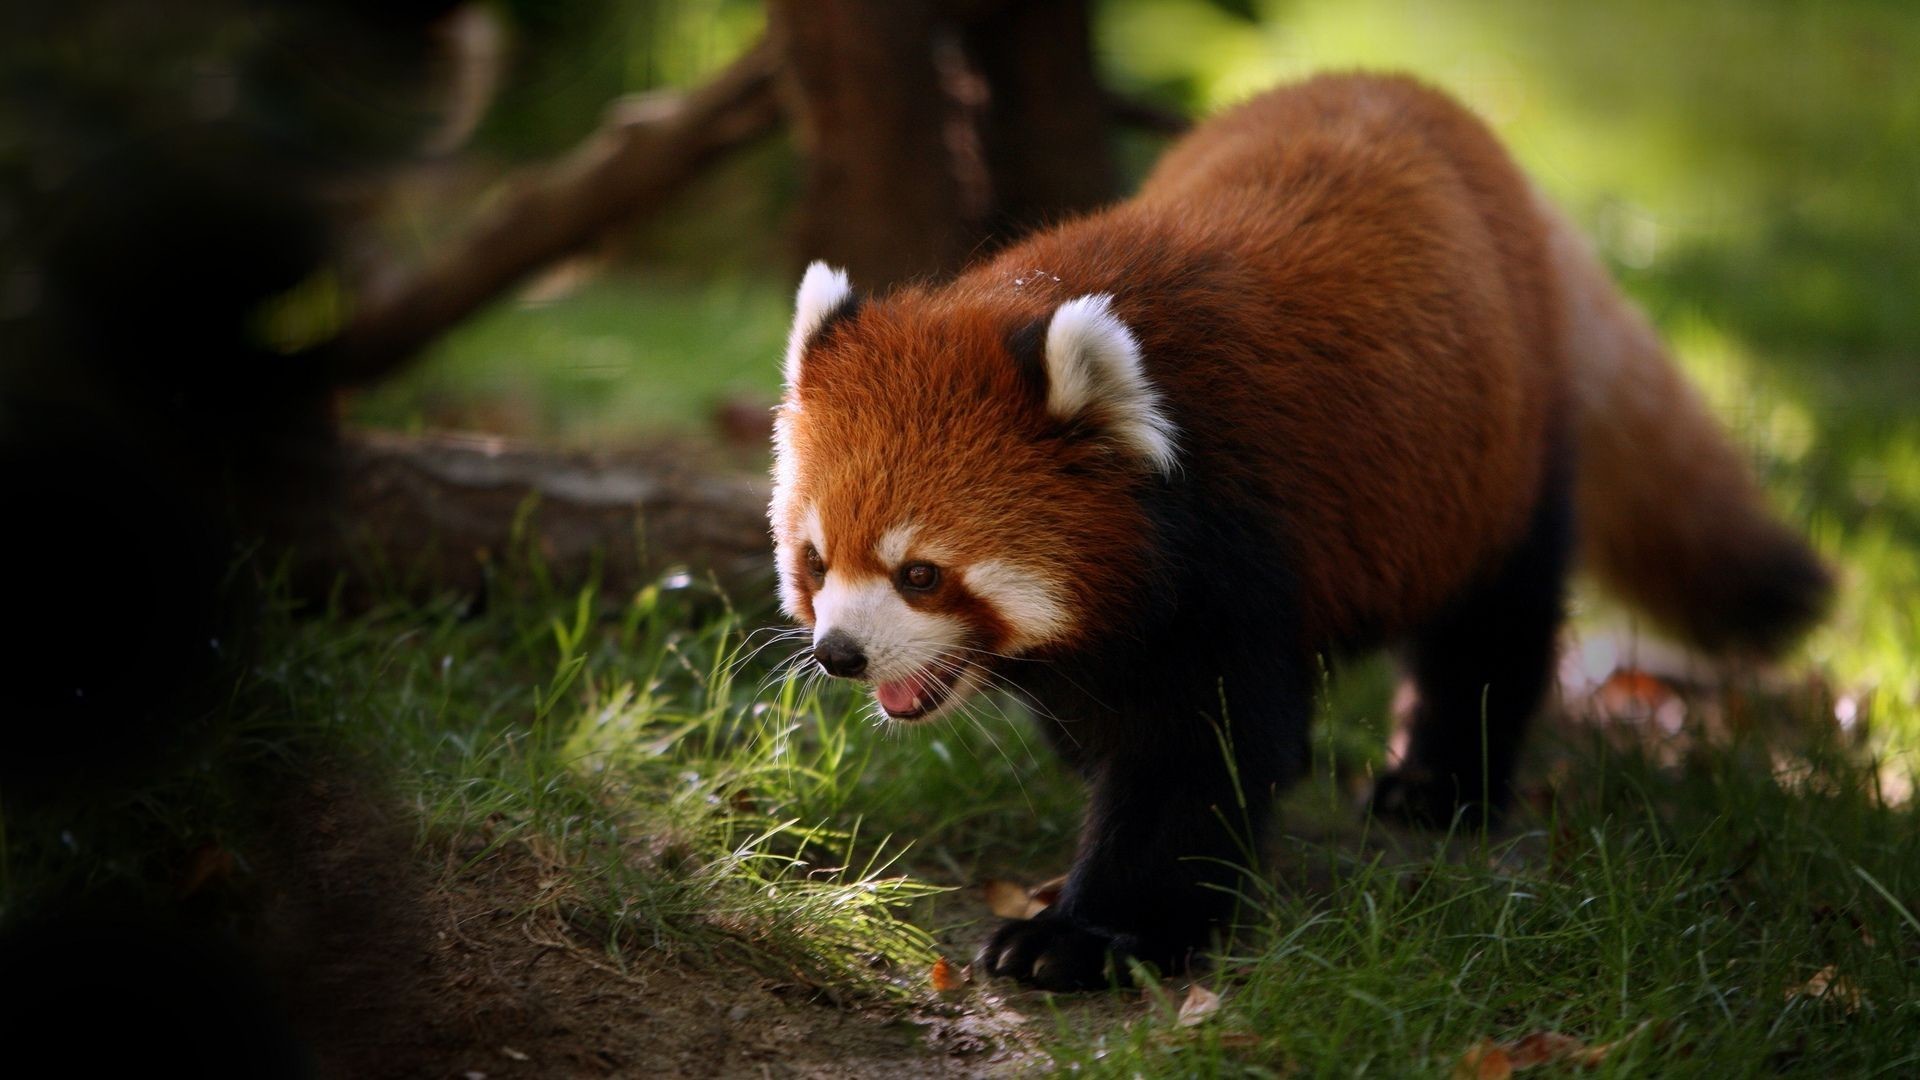 Cute little baby red panda